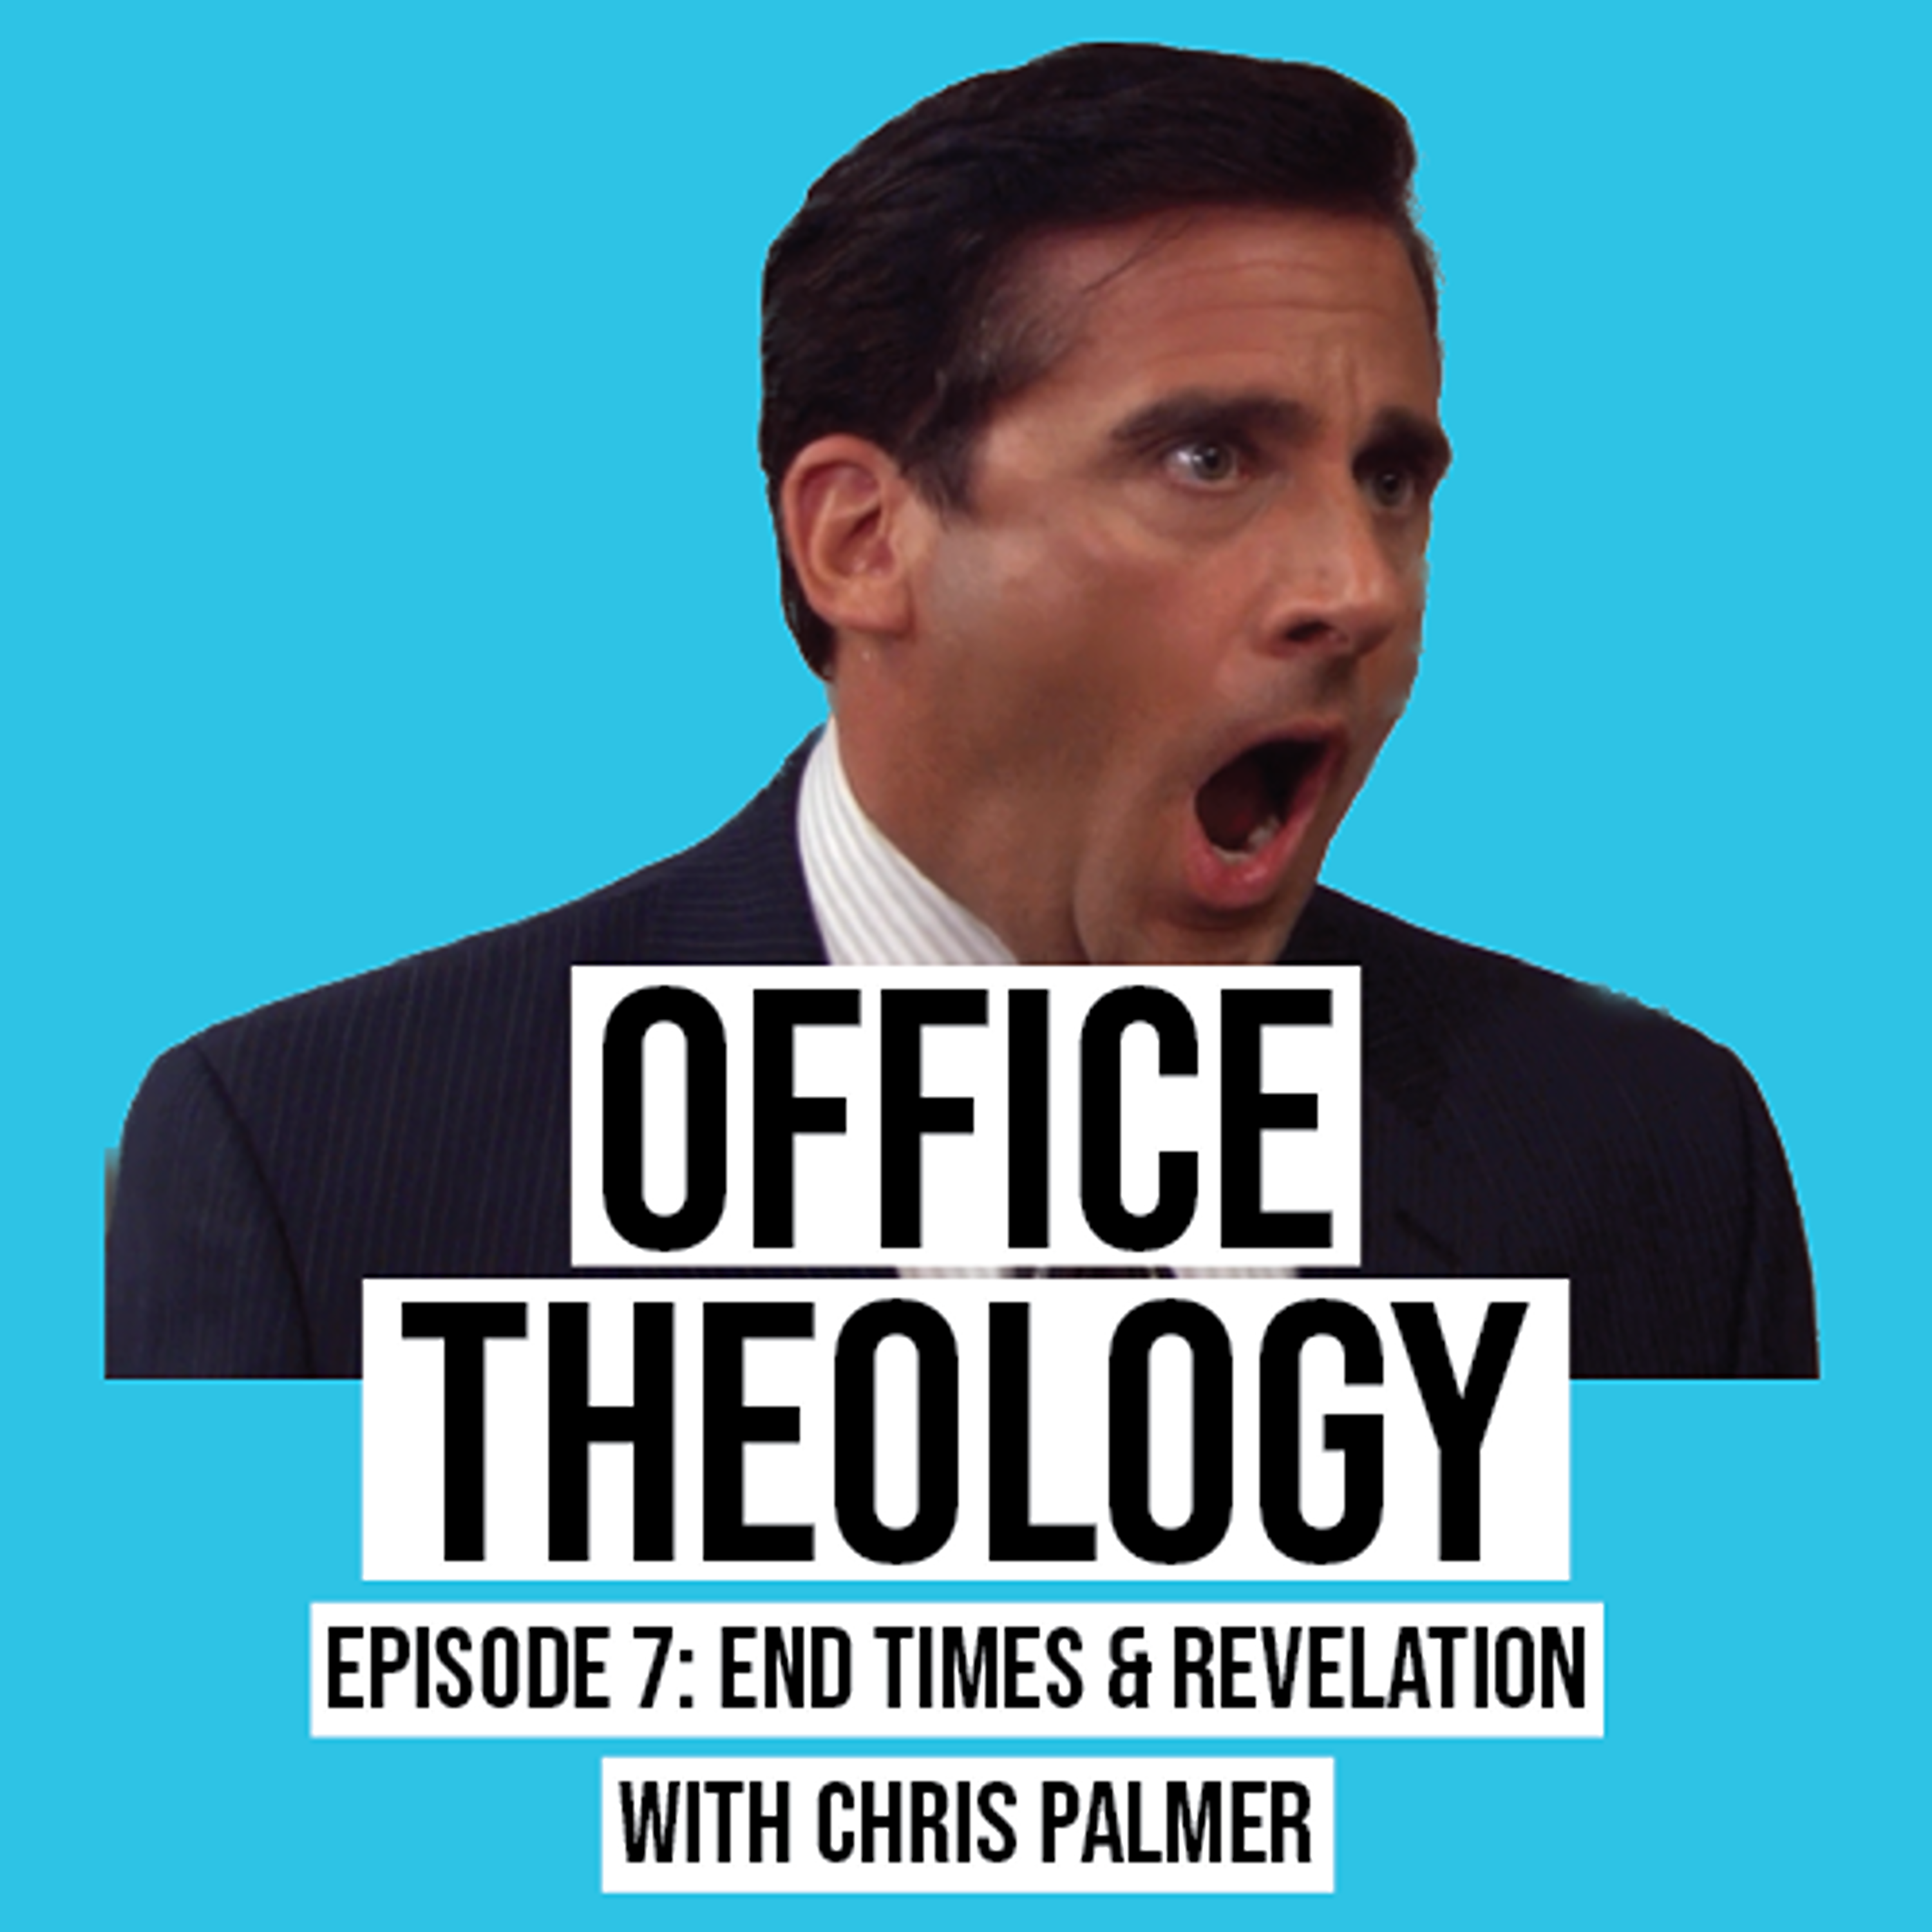 Episode 7: Pt. 1 - End Times & Revelation with Chris Palmer